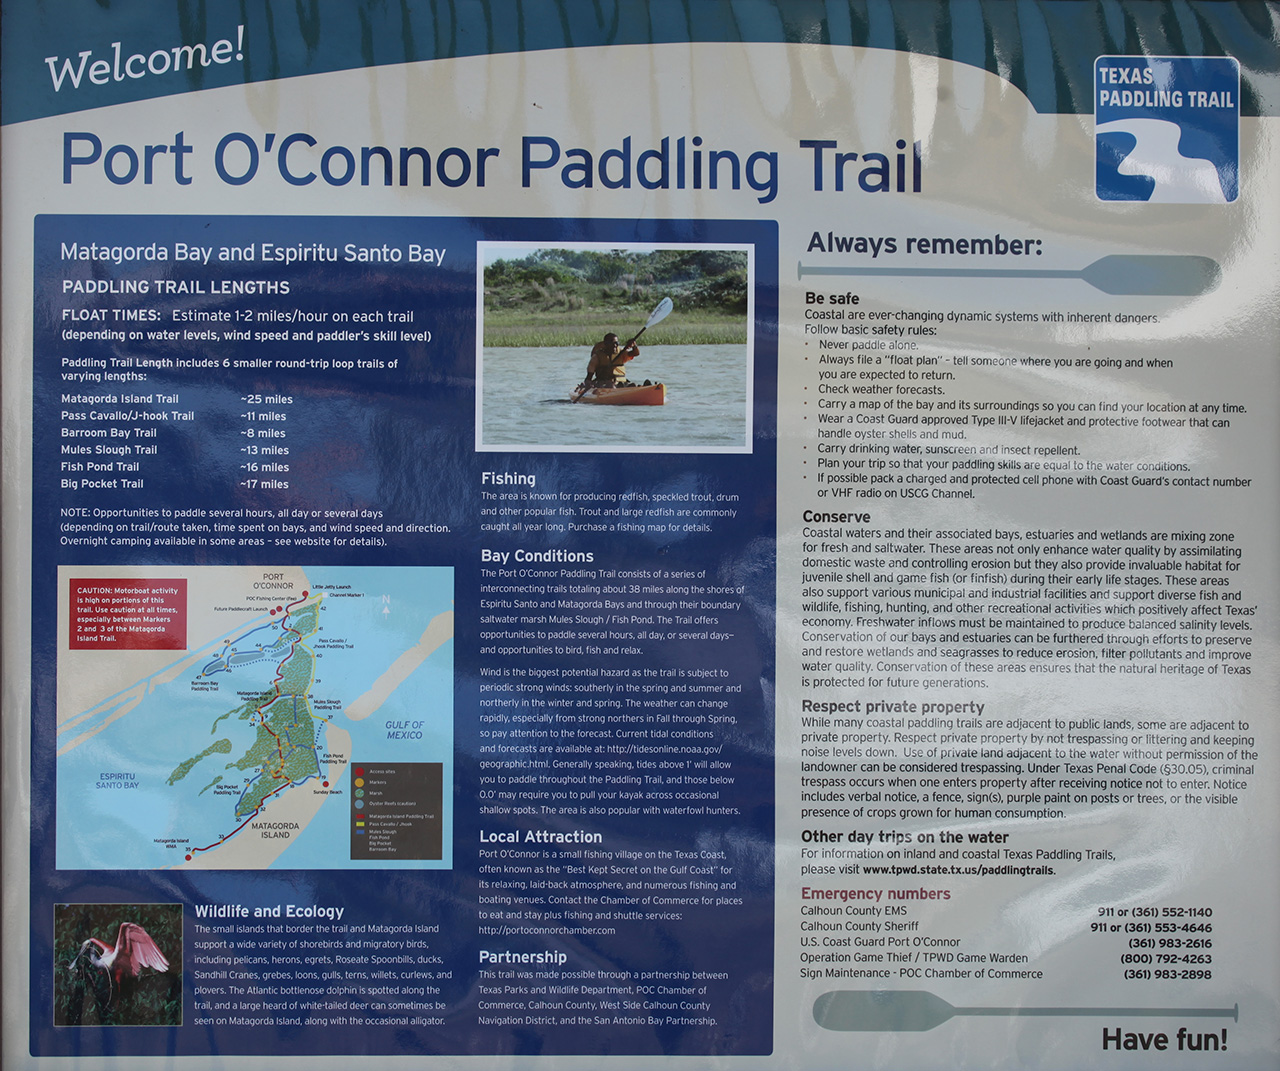 Port O'Connor paddling trail